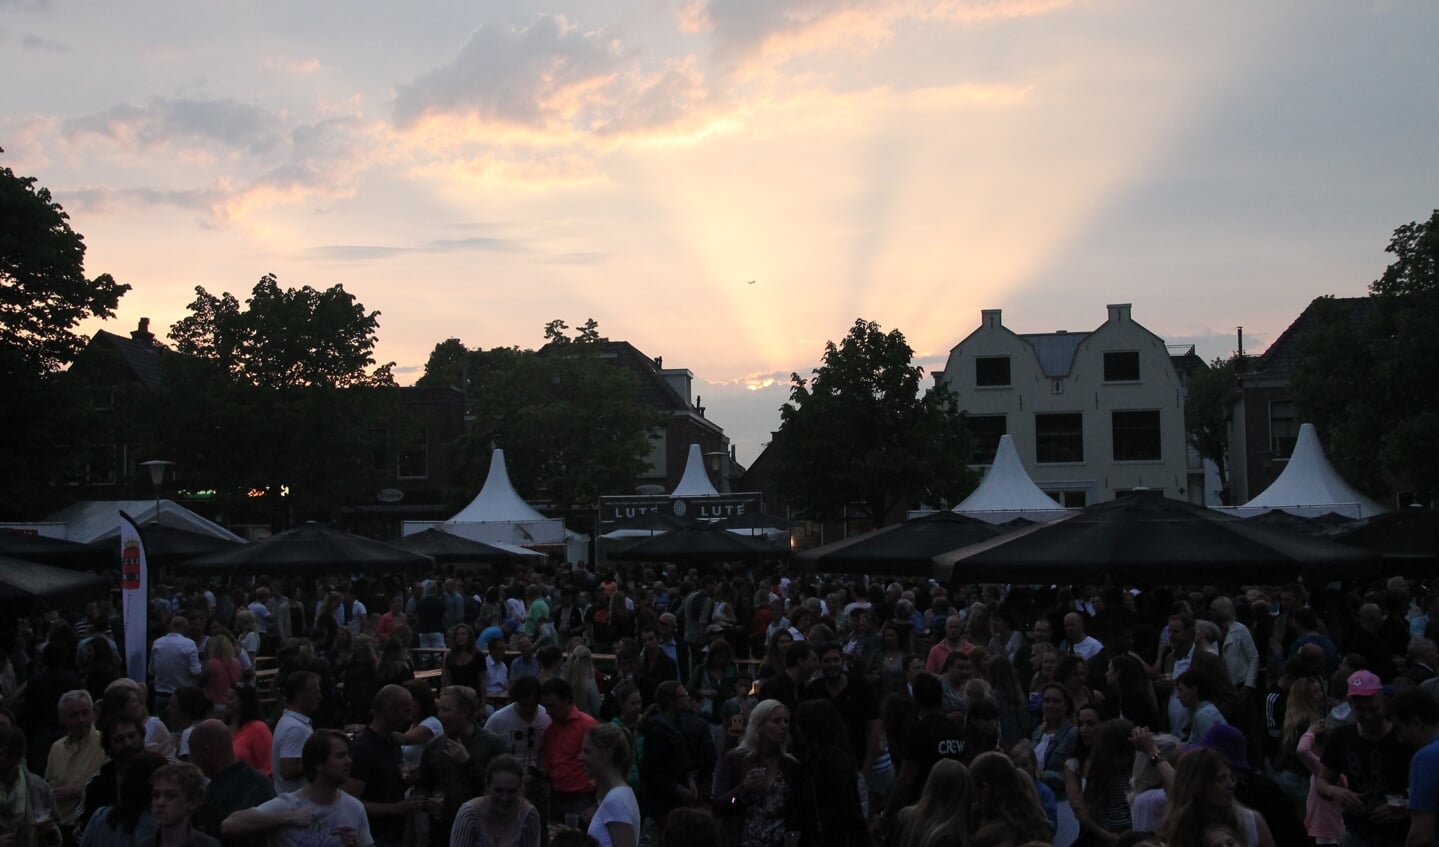 Bij het Amstel Zomer Festival is traditioneel druk bezocht.